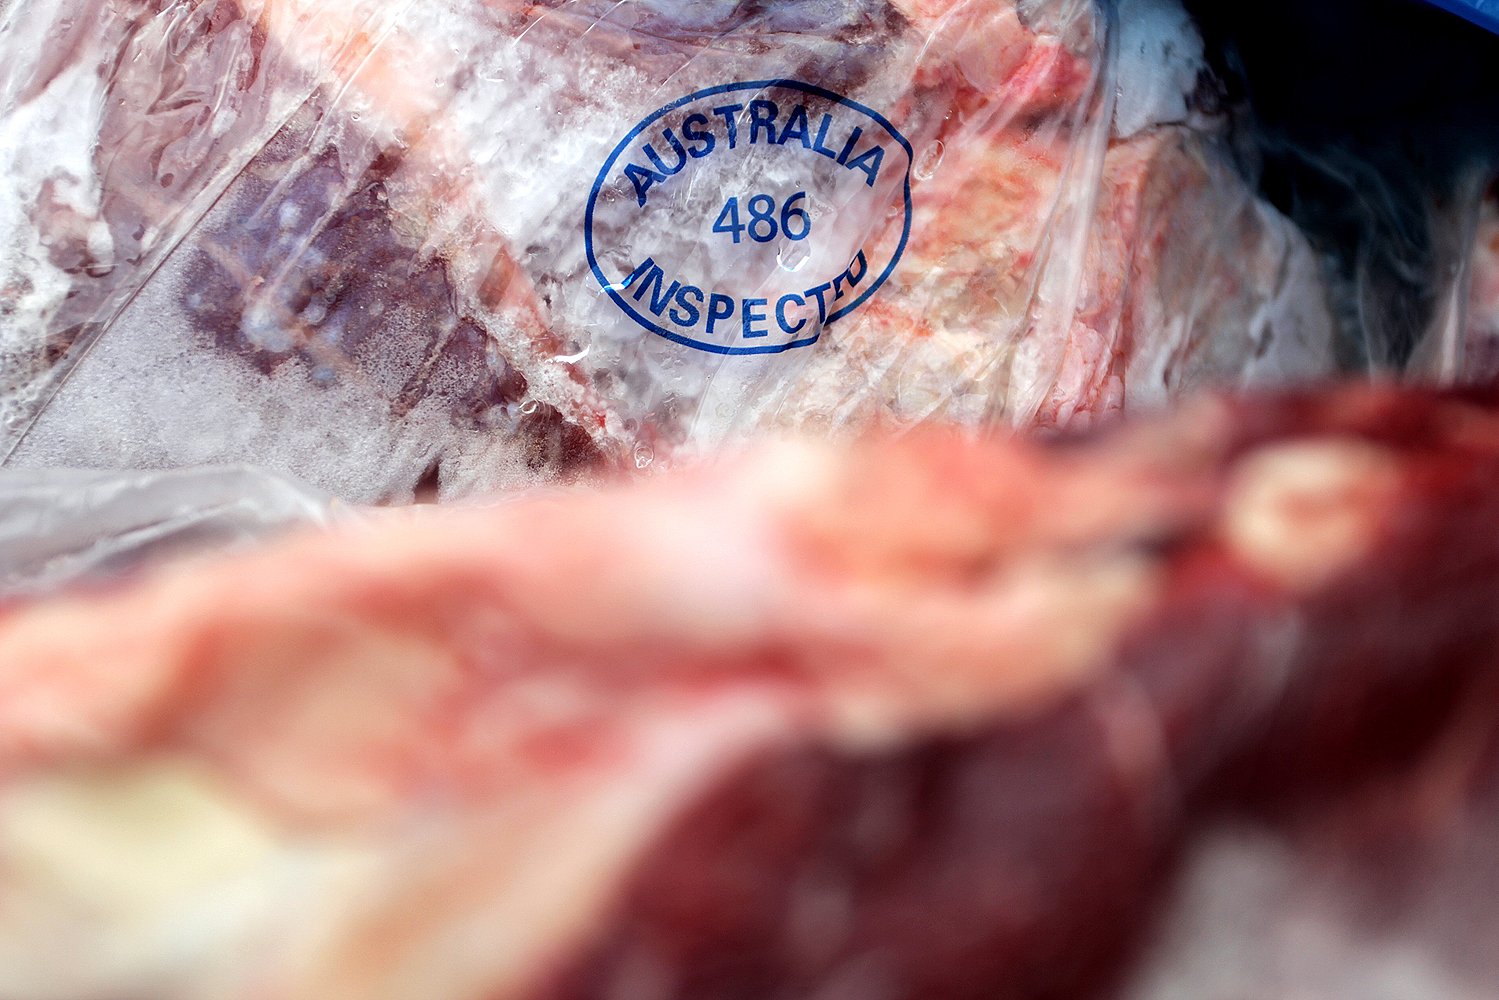 Bulog menjamin proses pemotongan sapi yang dagingnya diimpor dari Australia, sesuai dengan syariat Islam dan dijamin halal. 